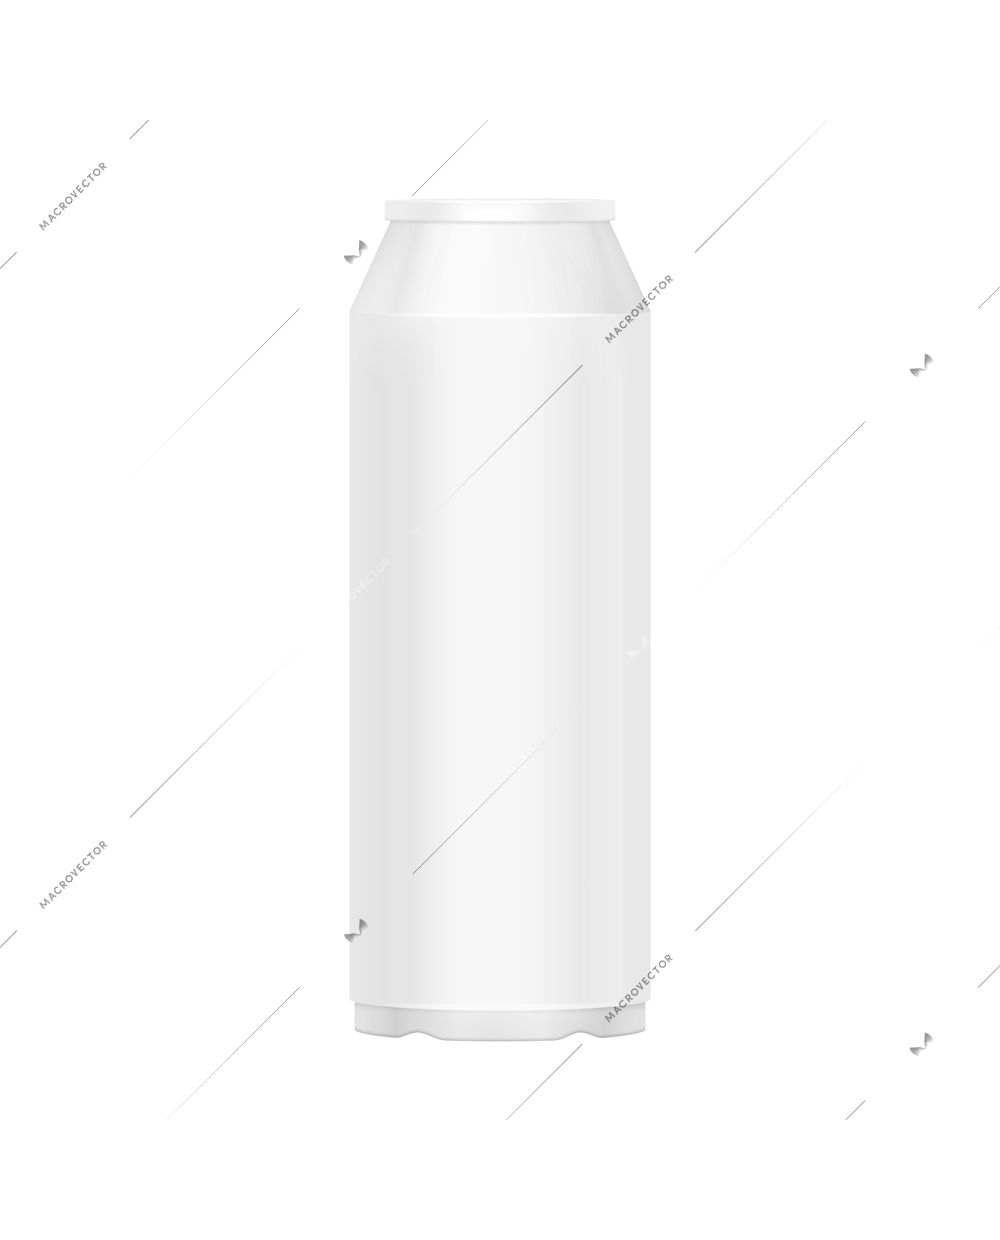 Blank white plastic detergent bottle mockup realistic vector illustration